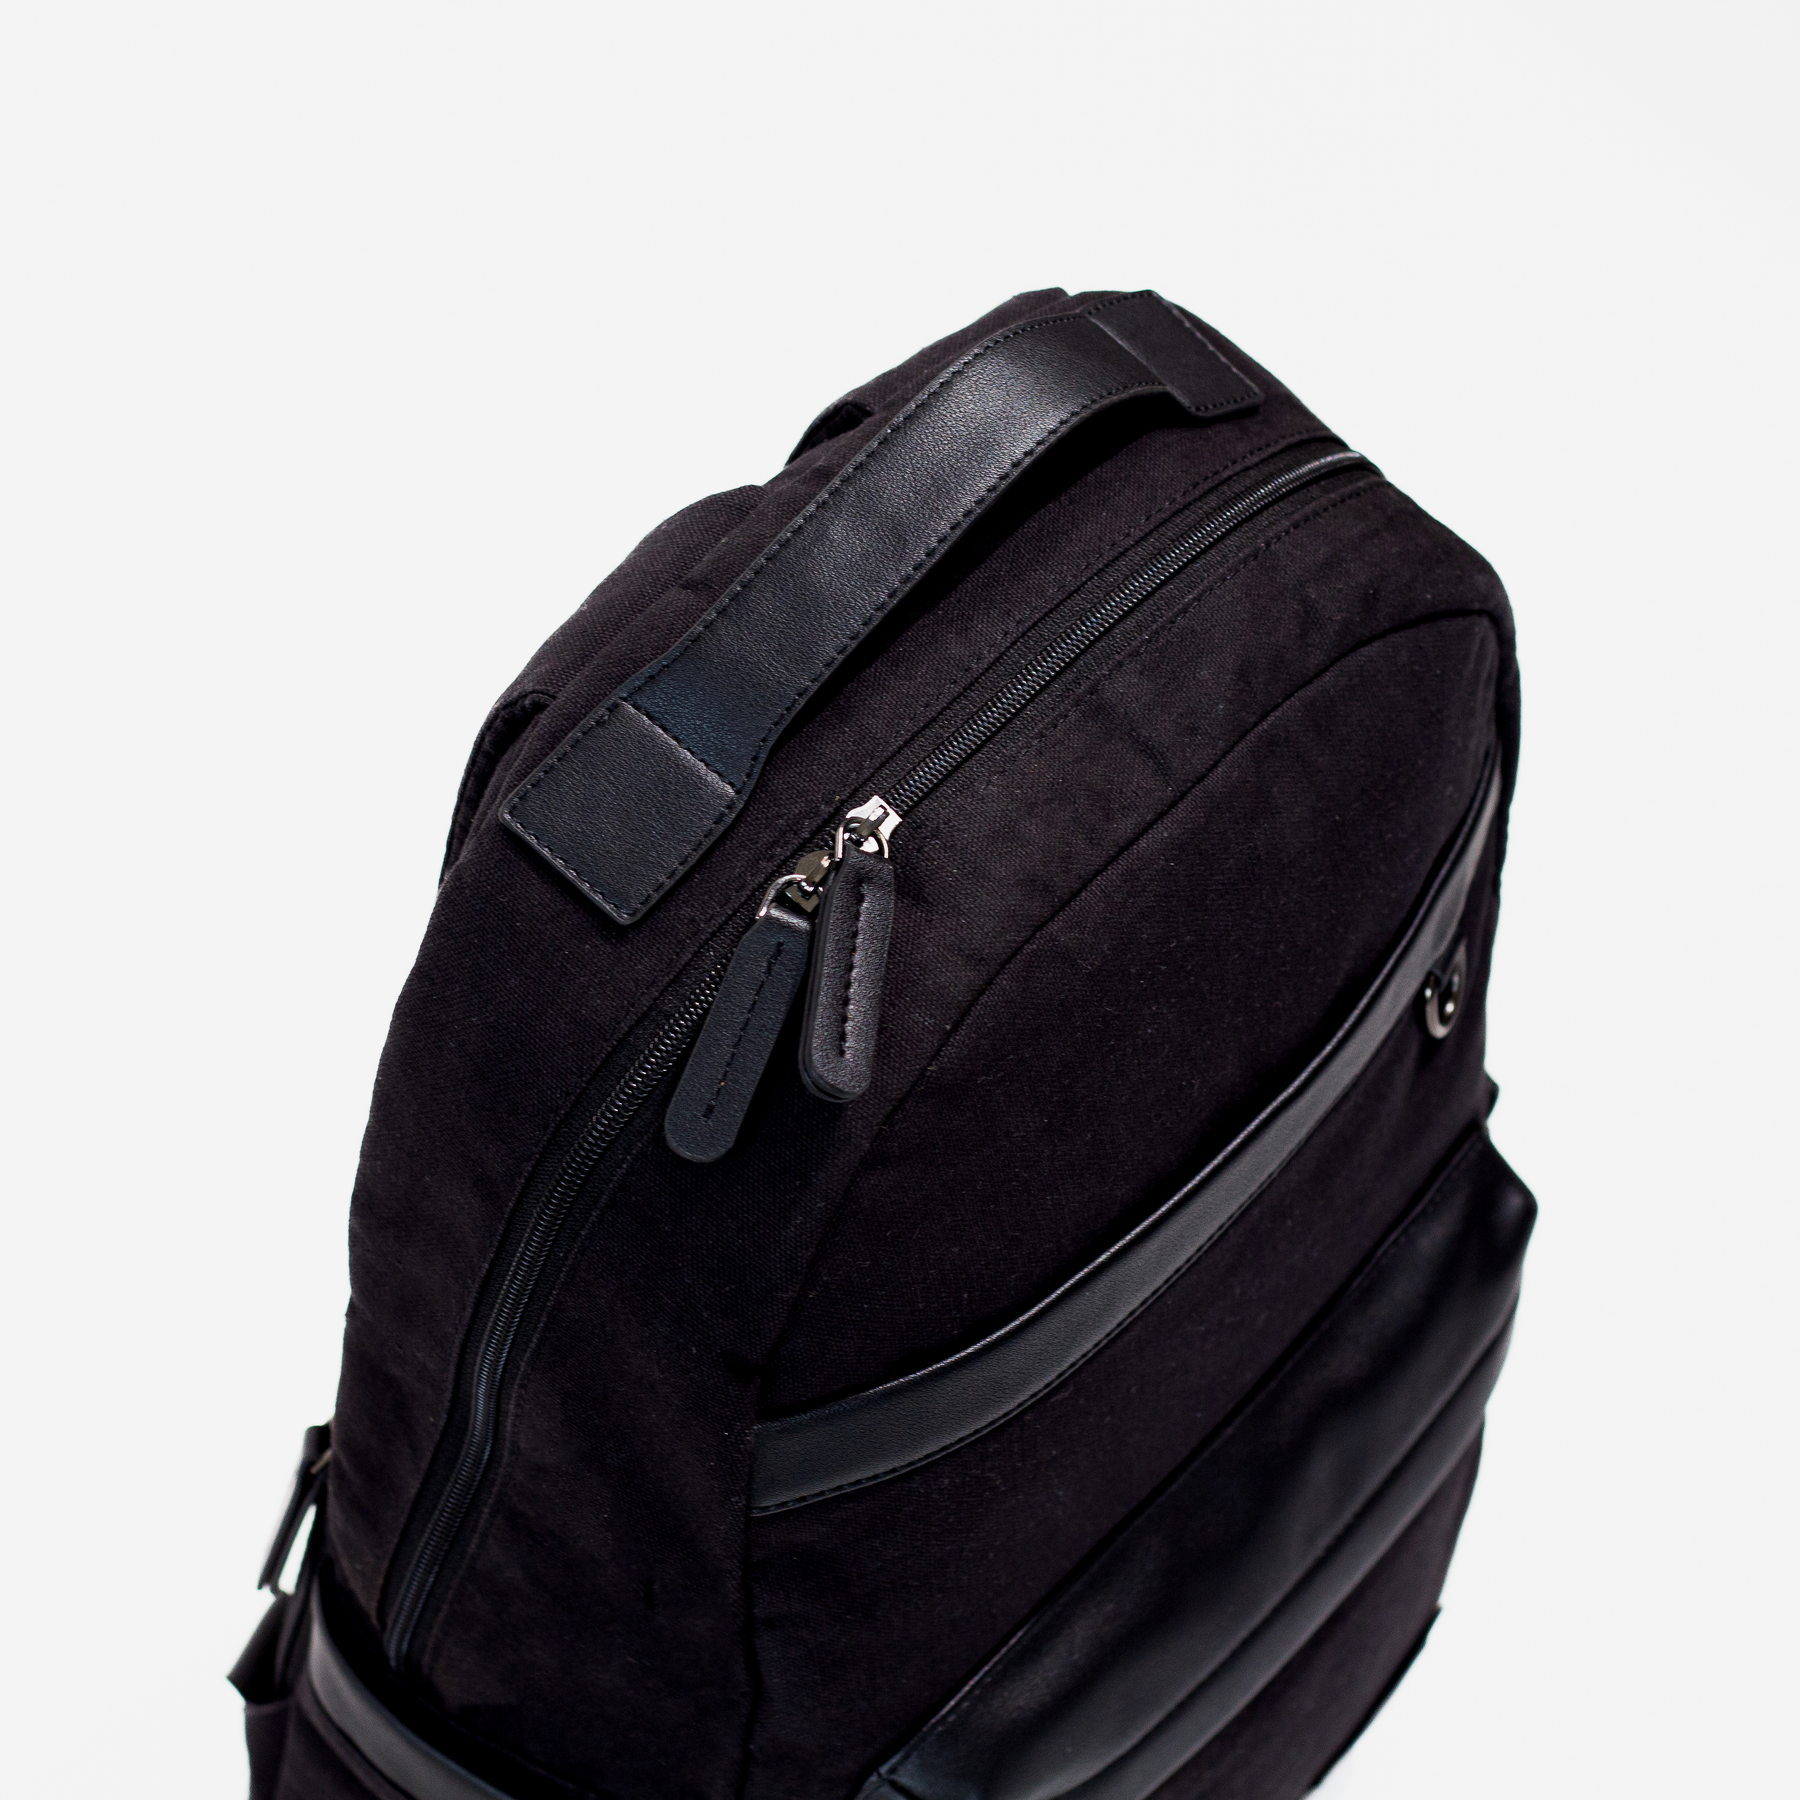 Personalised Rover Backpack - Black